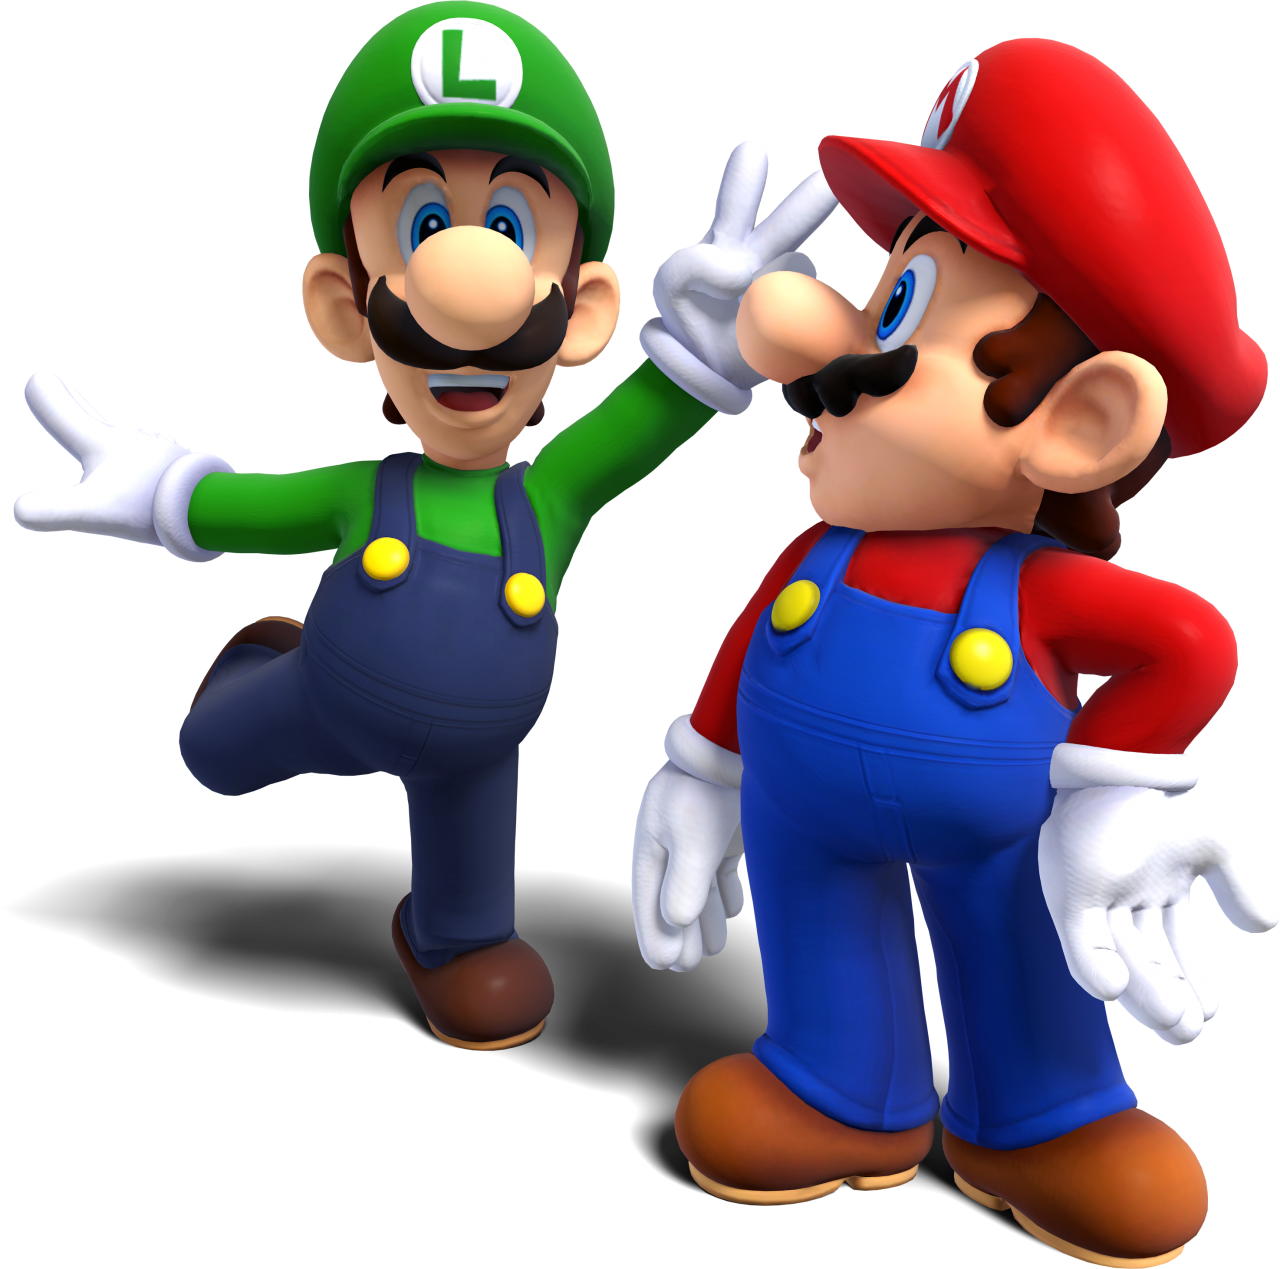 Super Mario PNG Image File